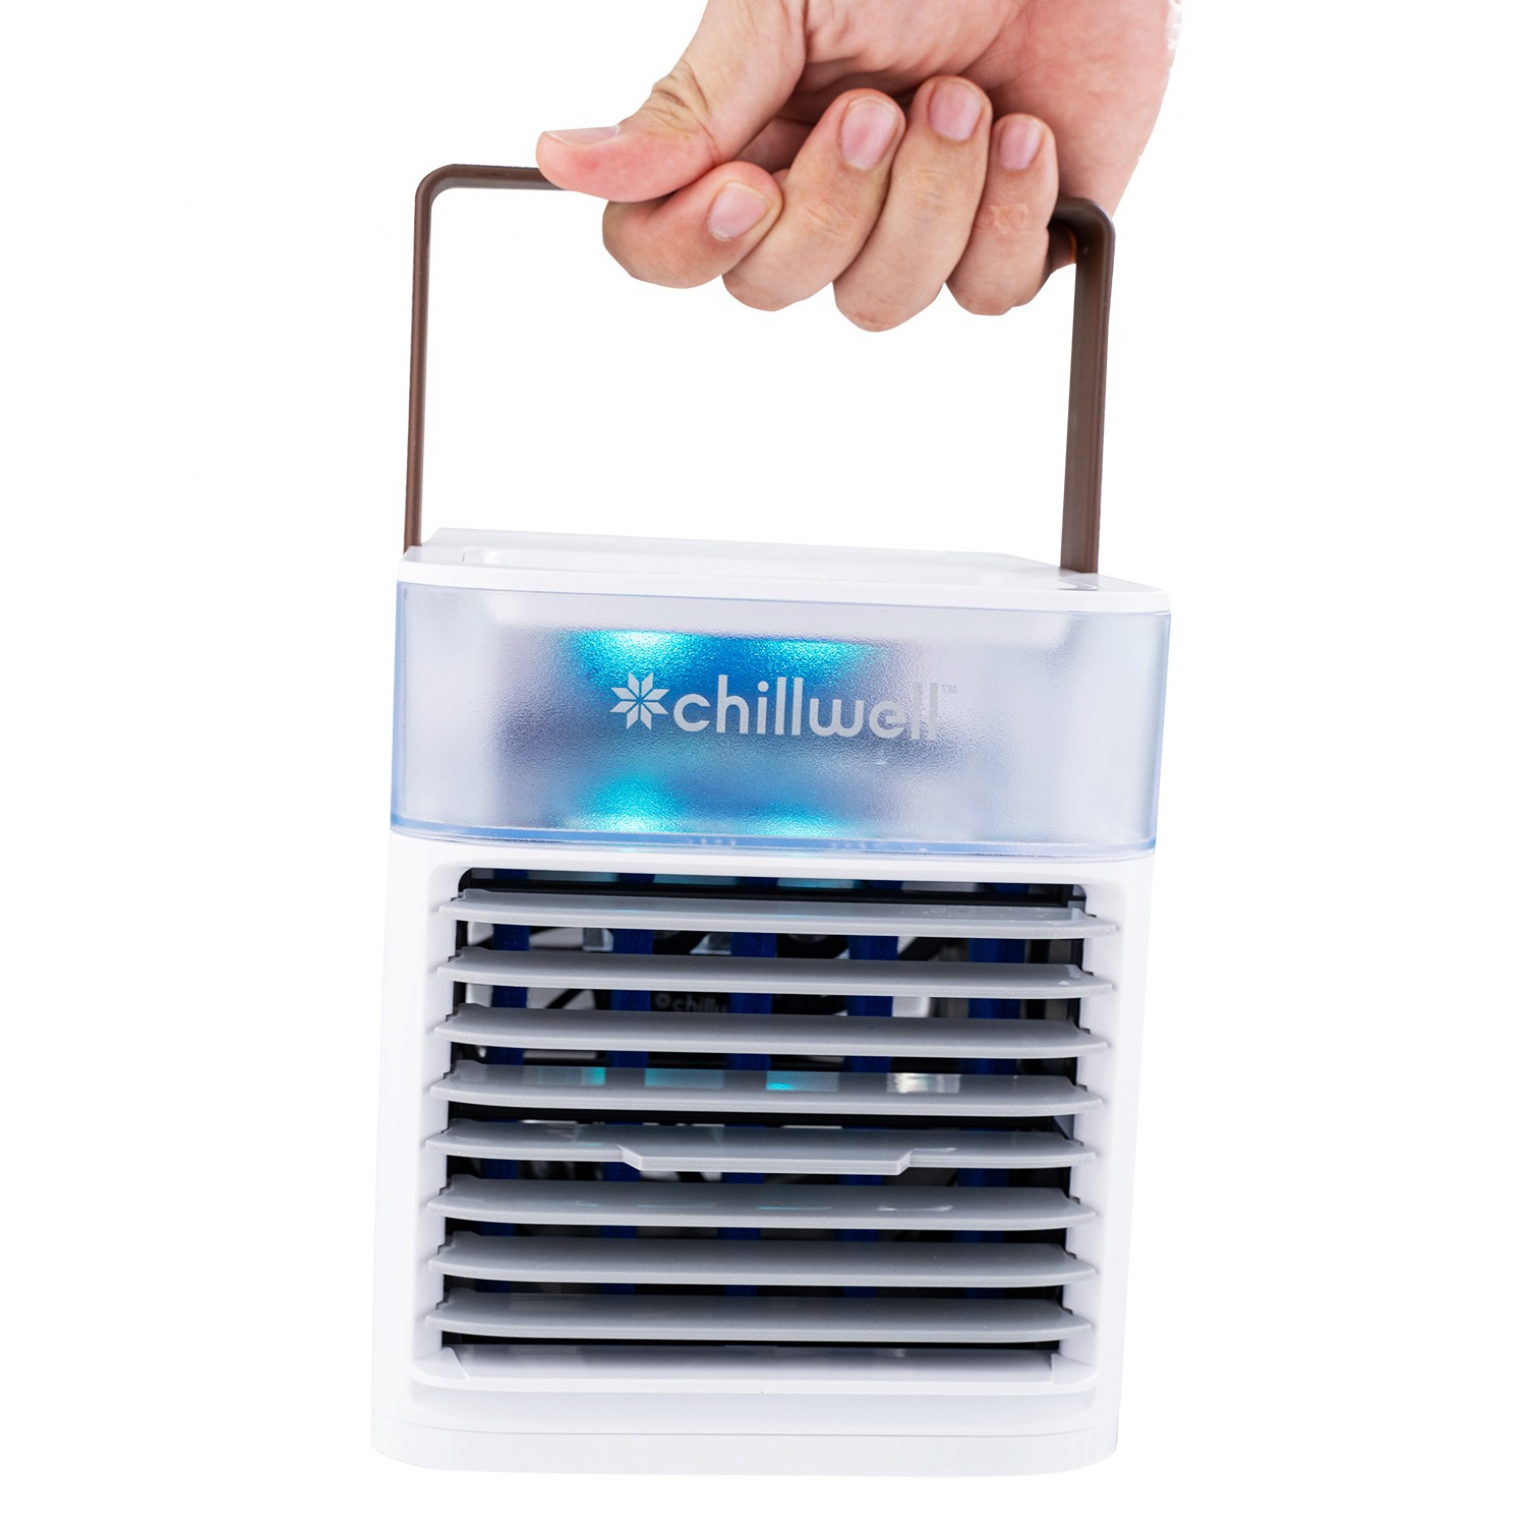 Chillwell Ac Dehumidifier